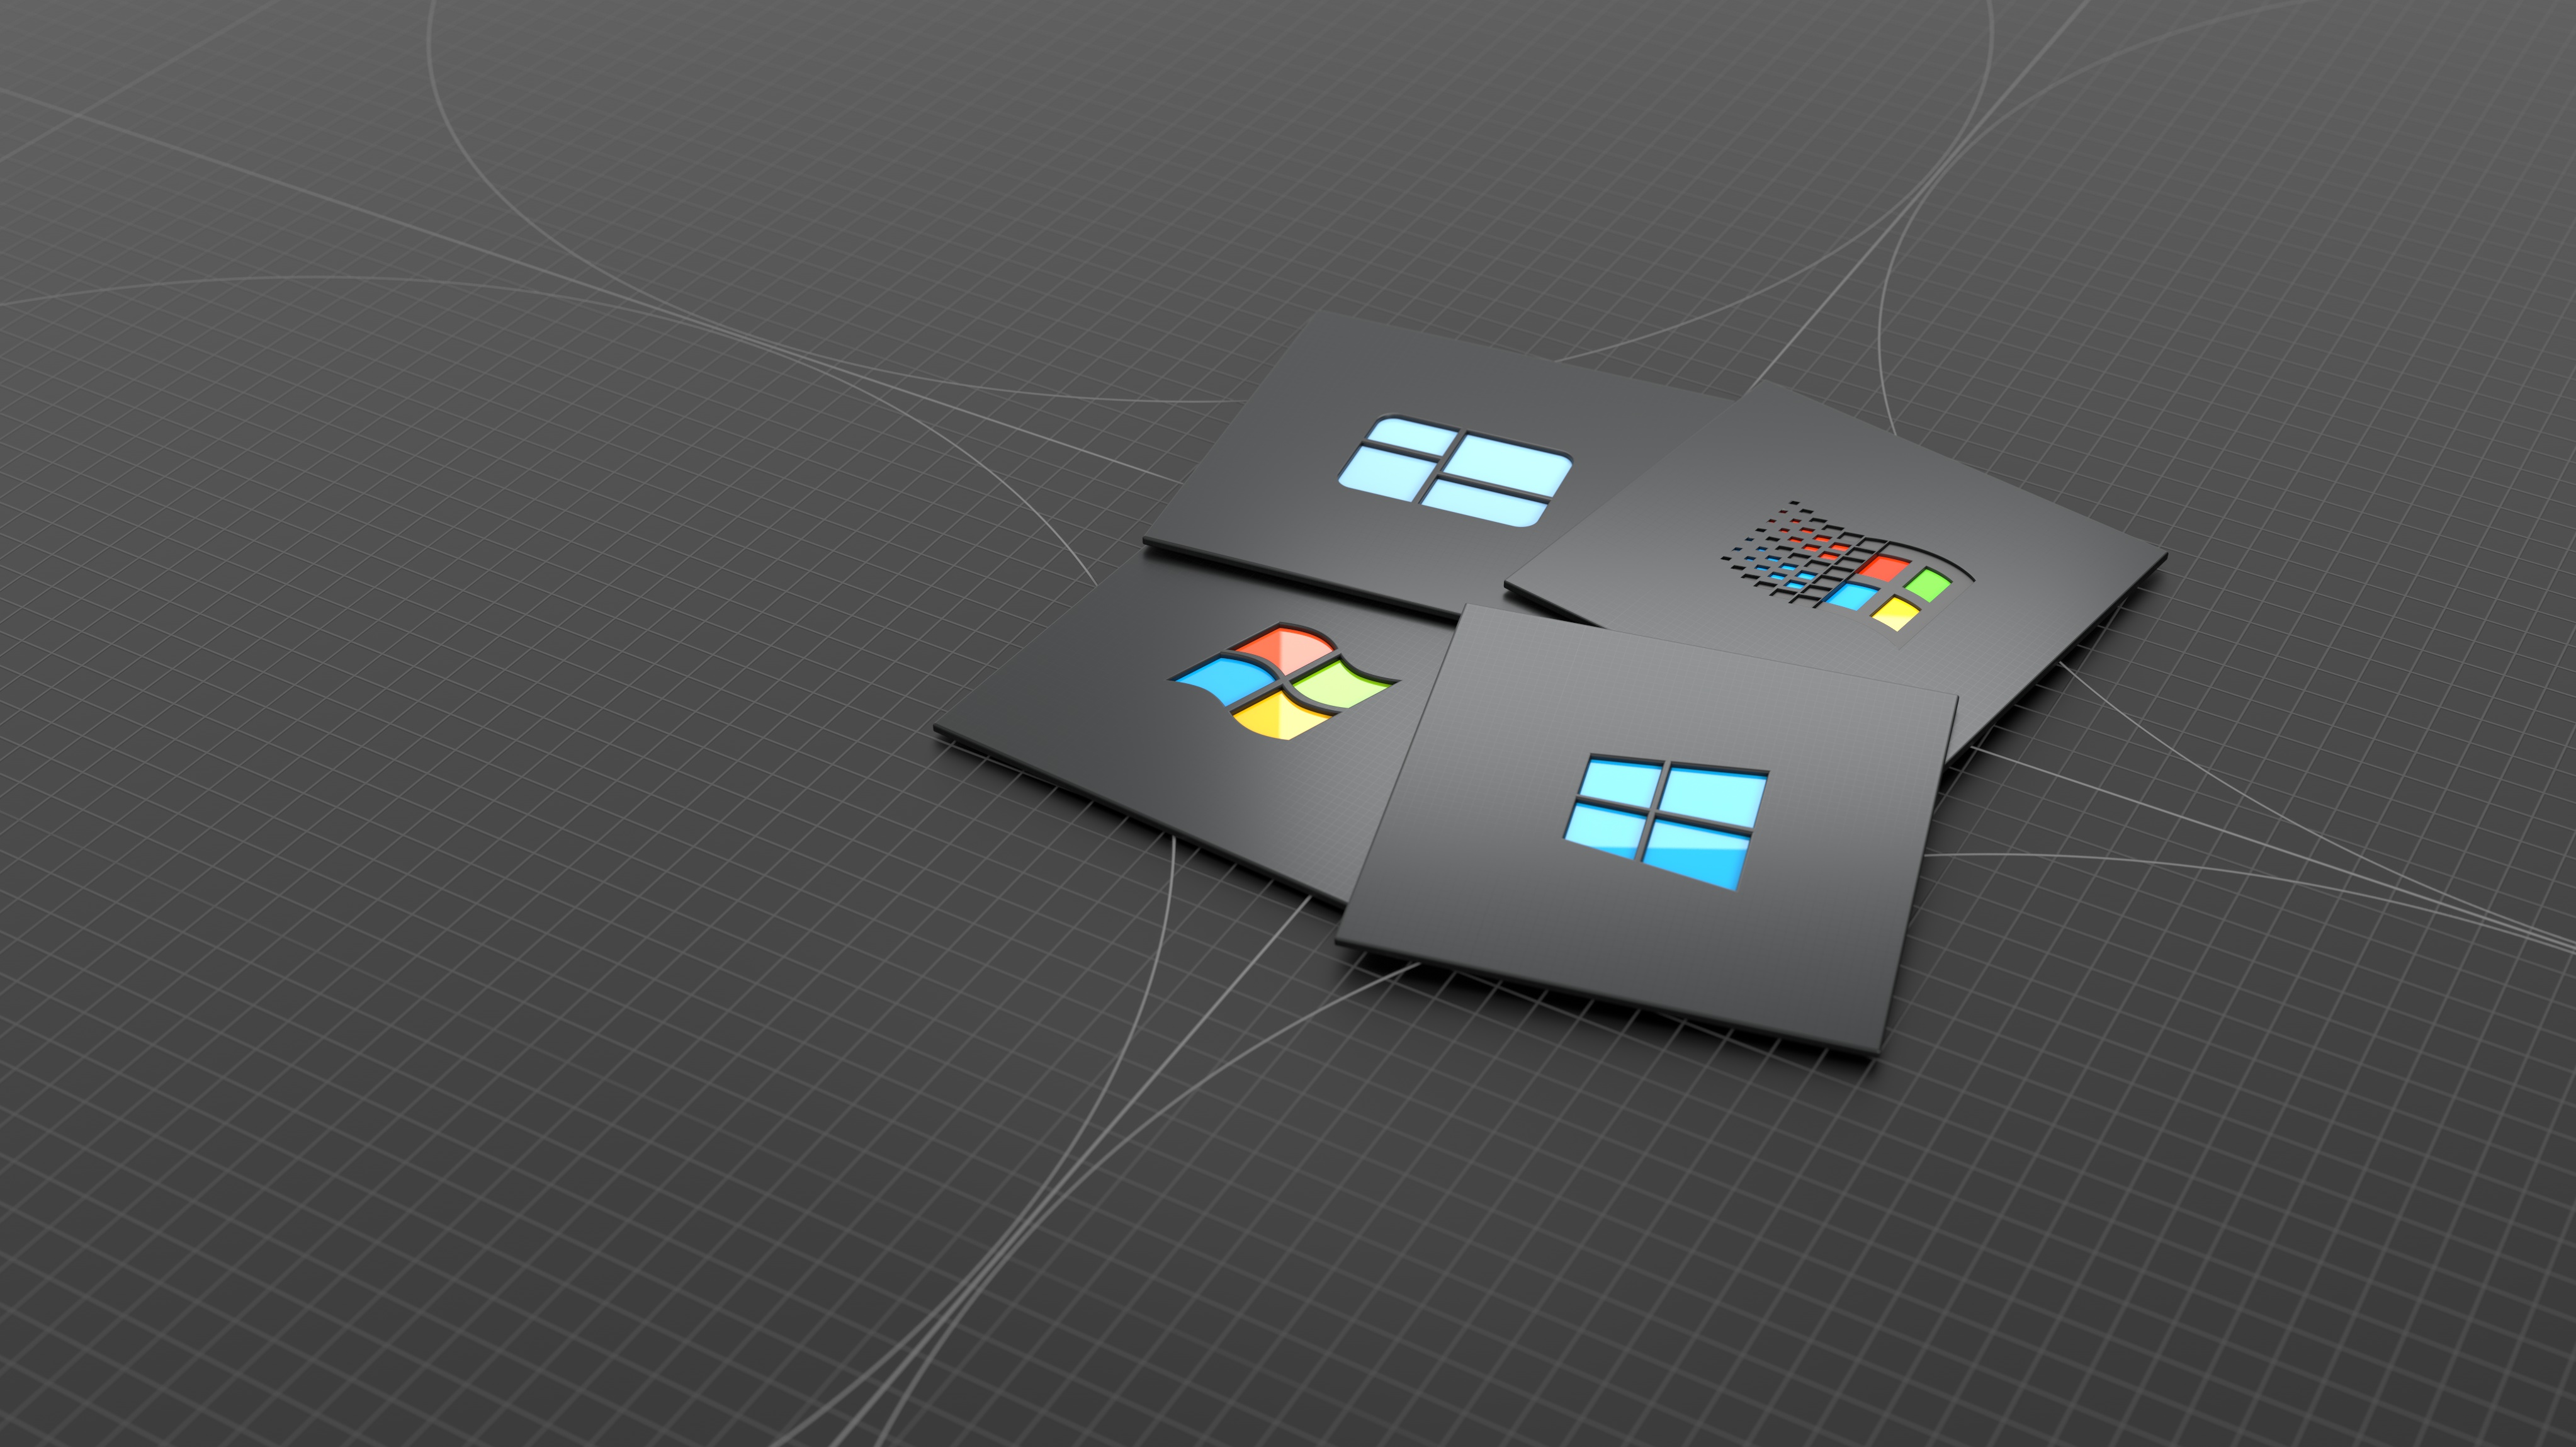 General 4092x2298 Windows 10 windows logo Windows 7 Microsoft Windows 95 Microsoft Windows operating system digital art